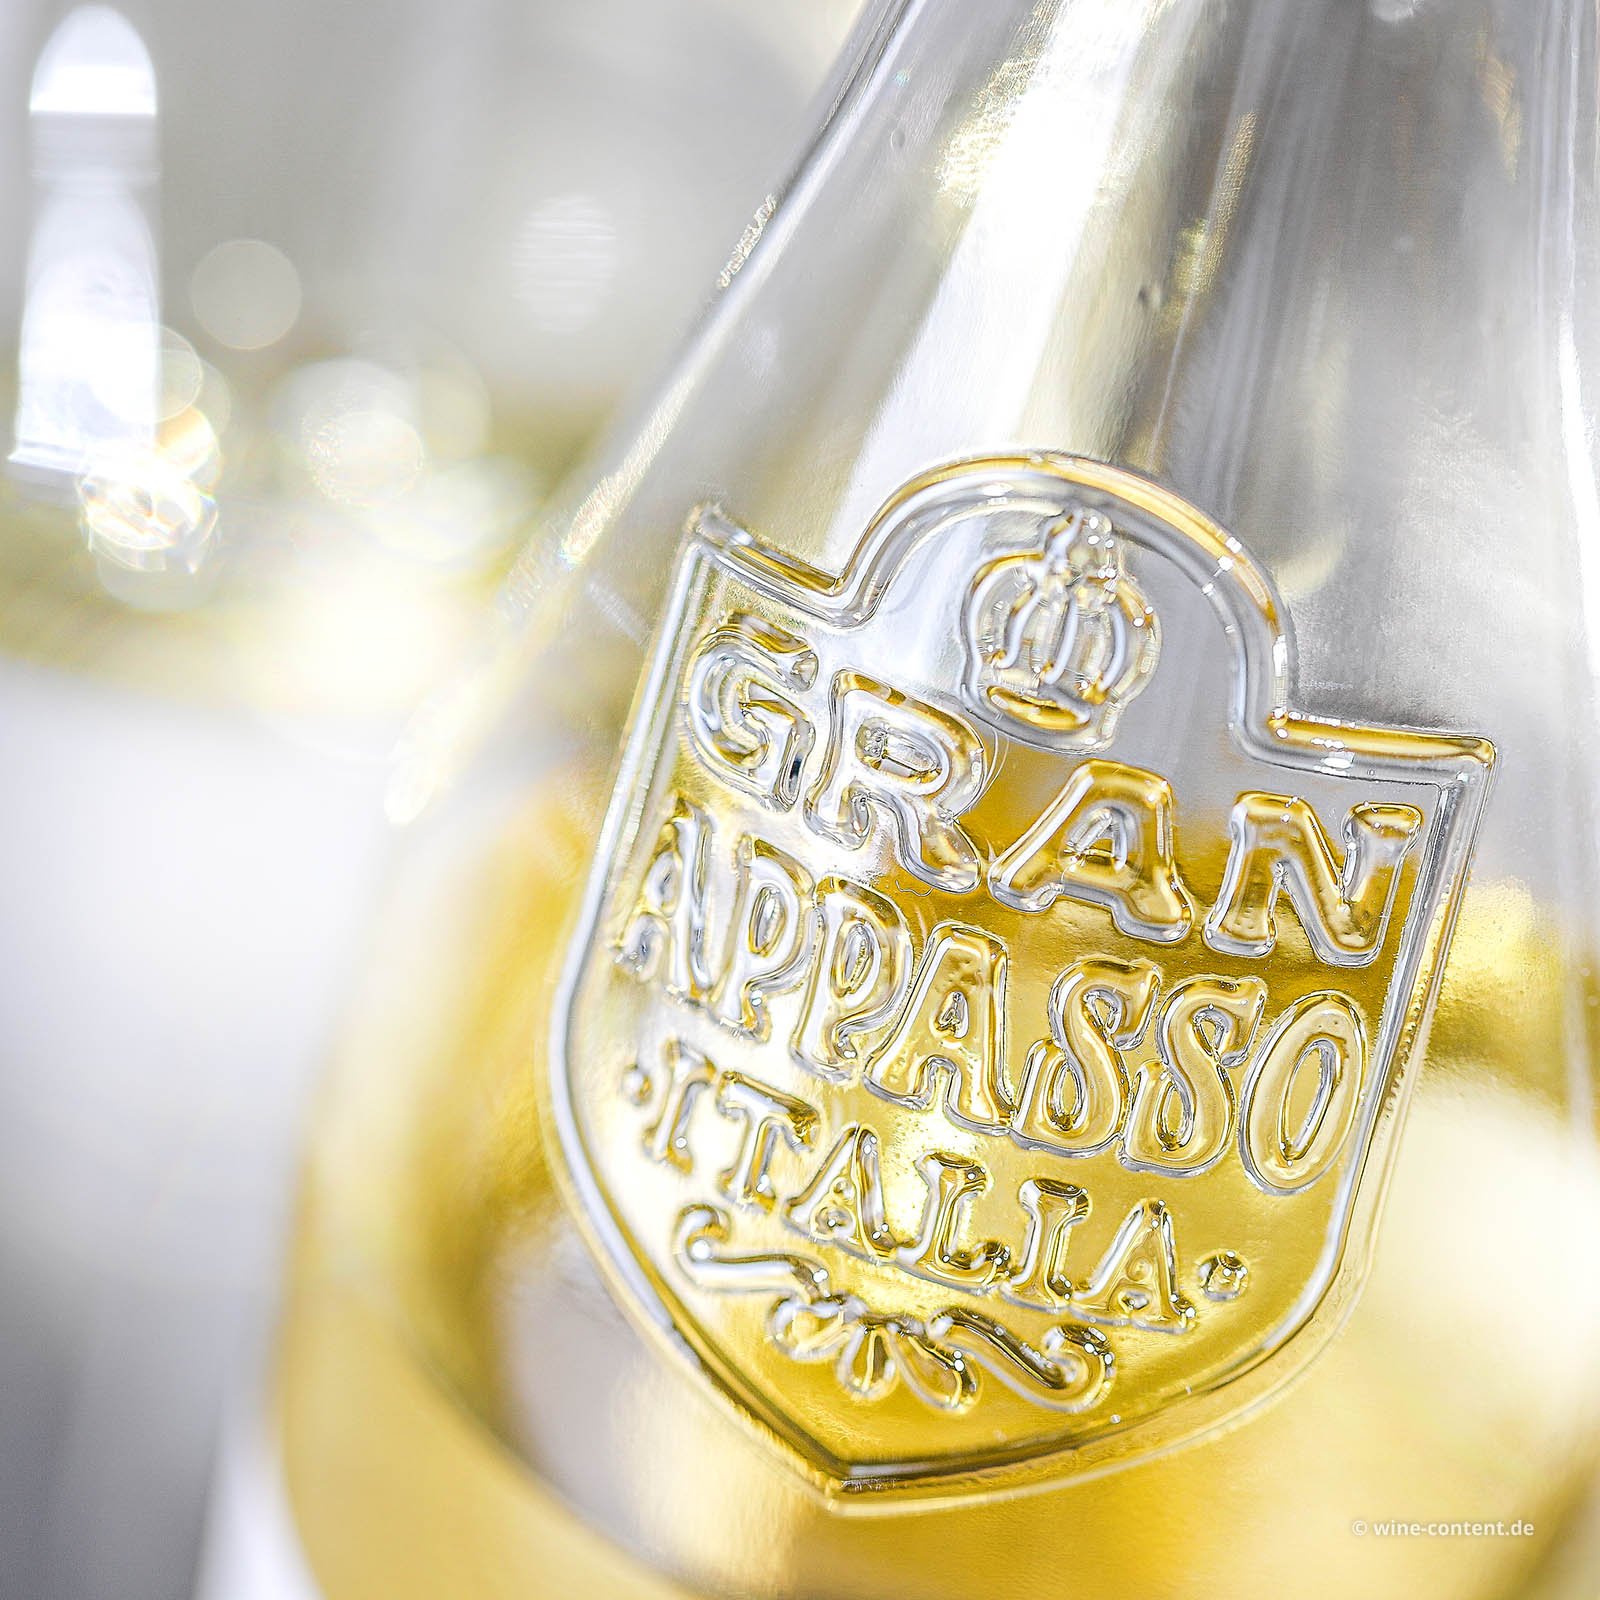 Chardonnay-Fiano 2023 Gran Appasso